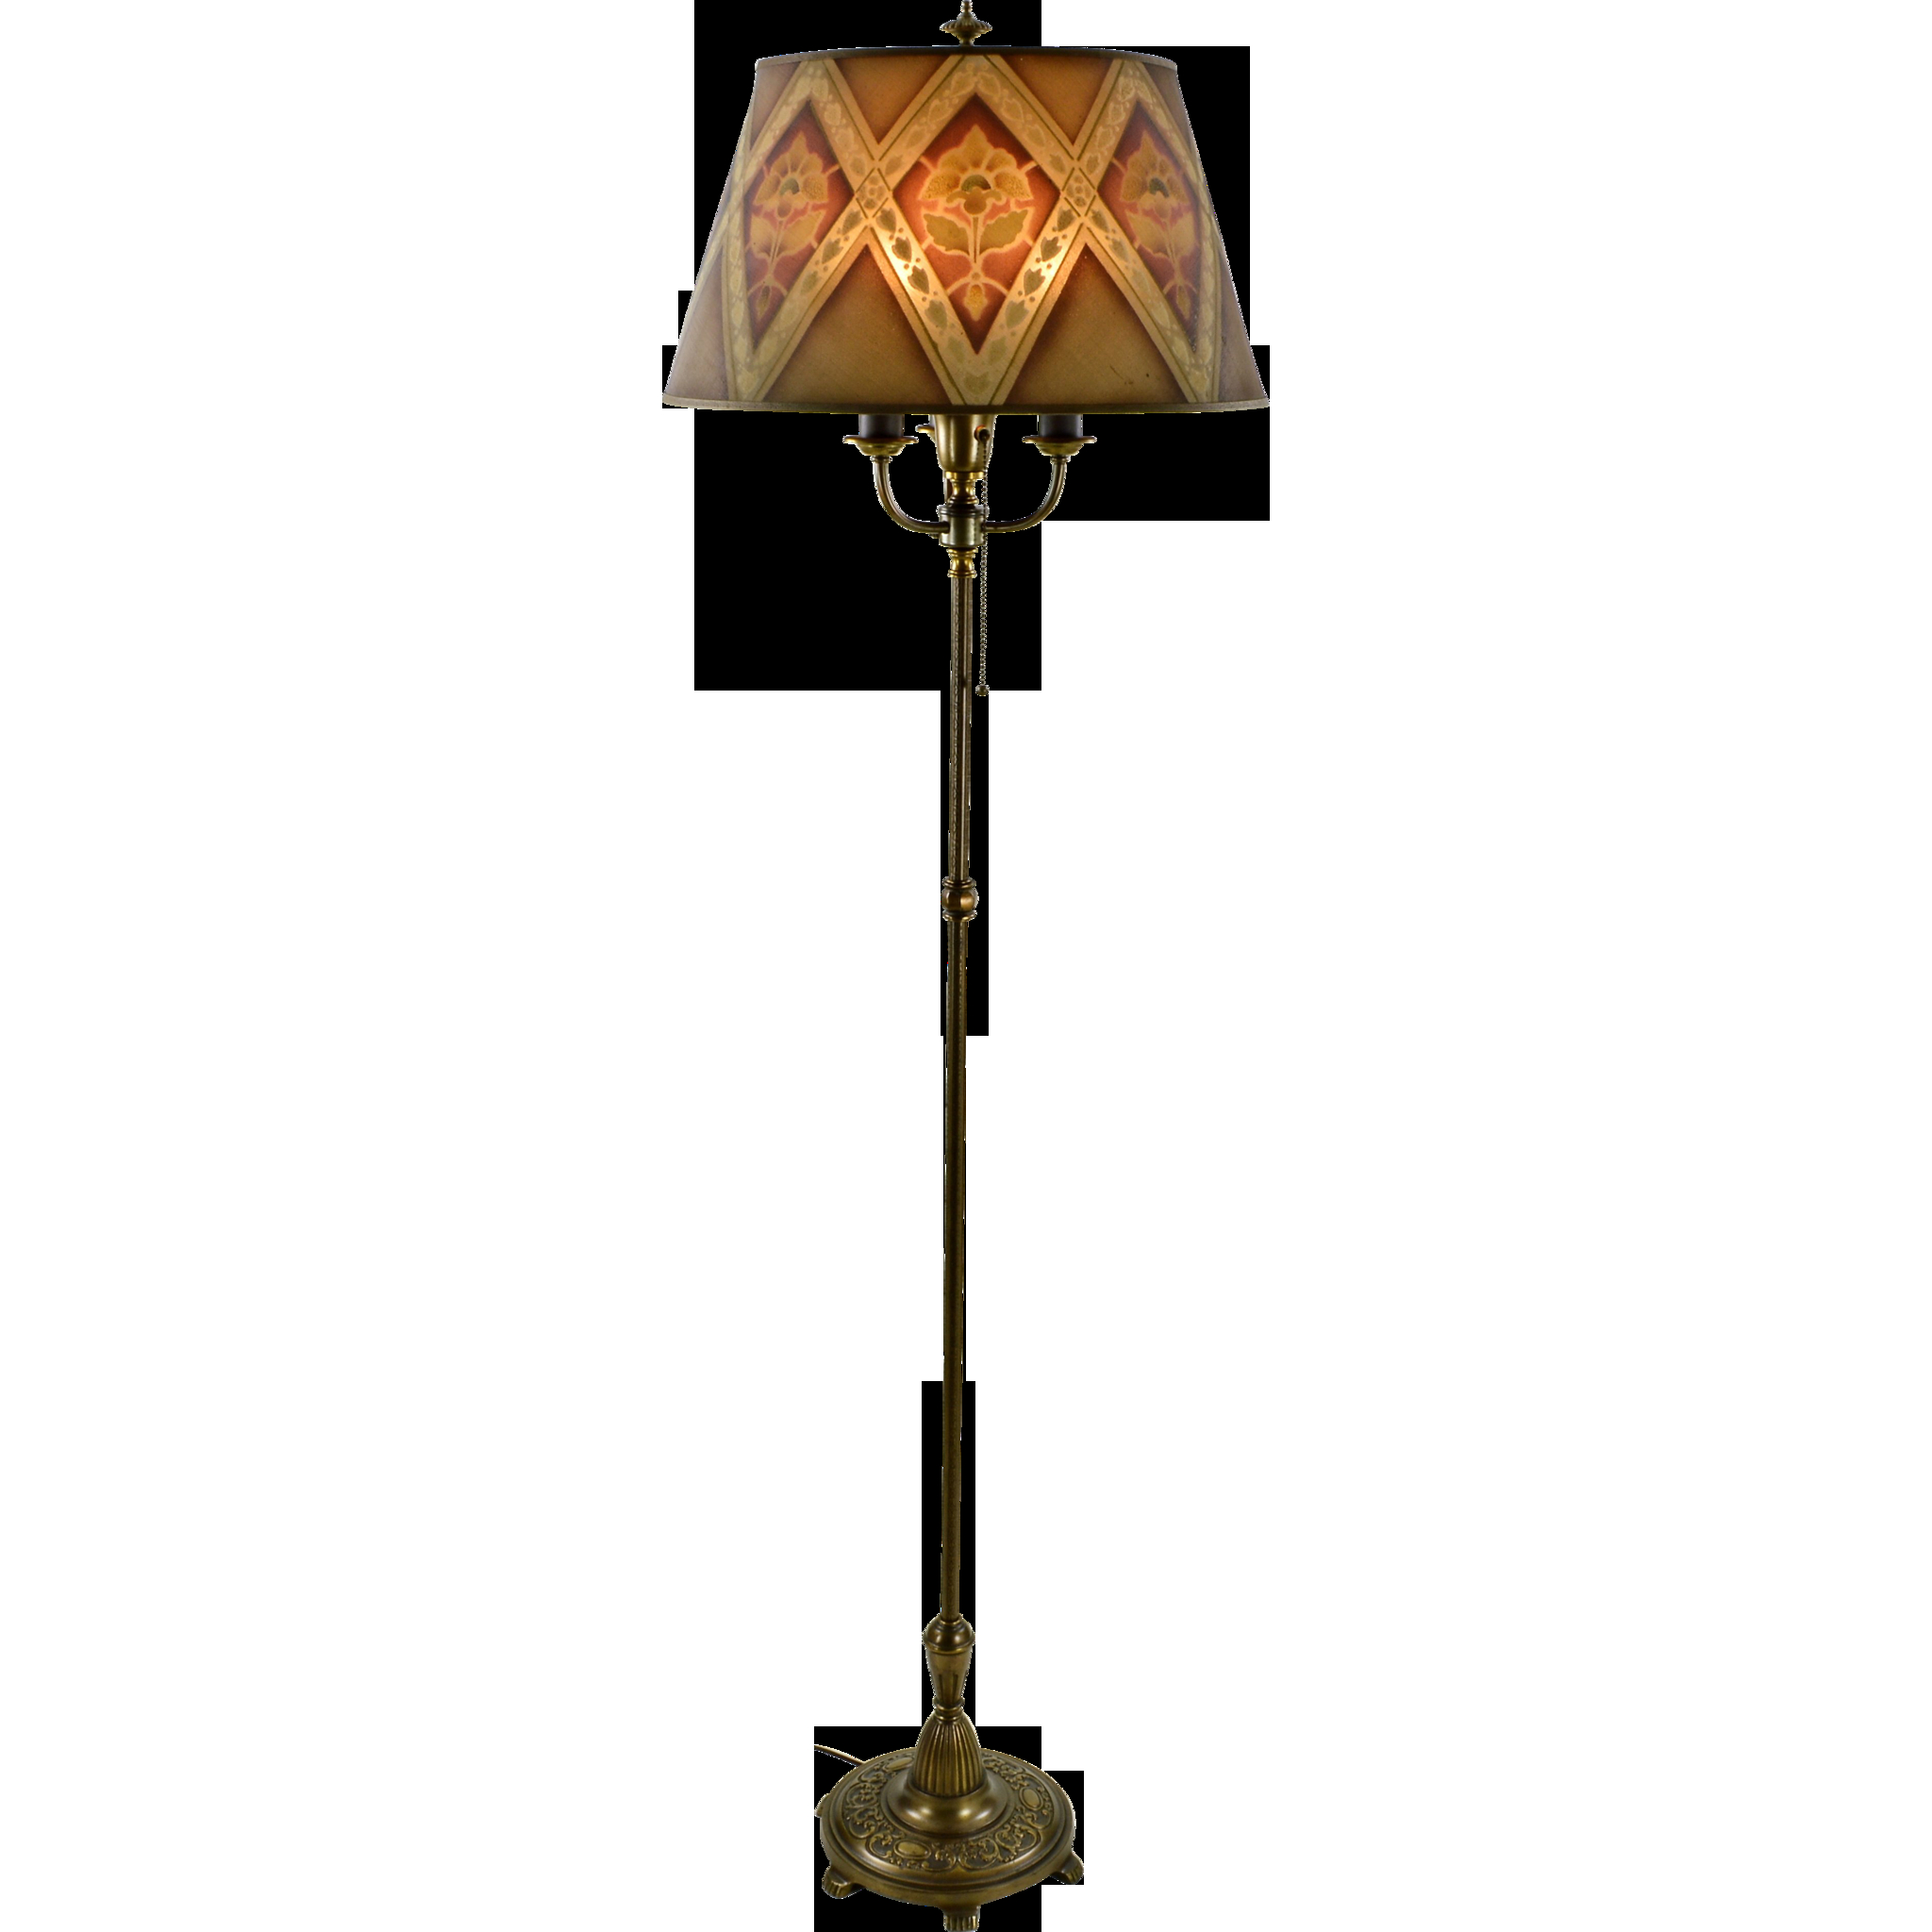 Lampenschirm Fr Stehlampe Lampenschirm Fr Stehlampe regarding size 2048 X 2048